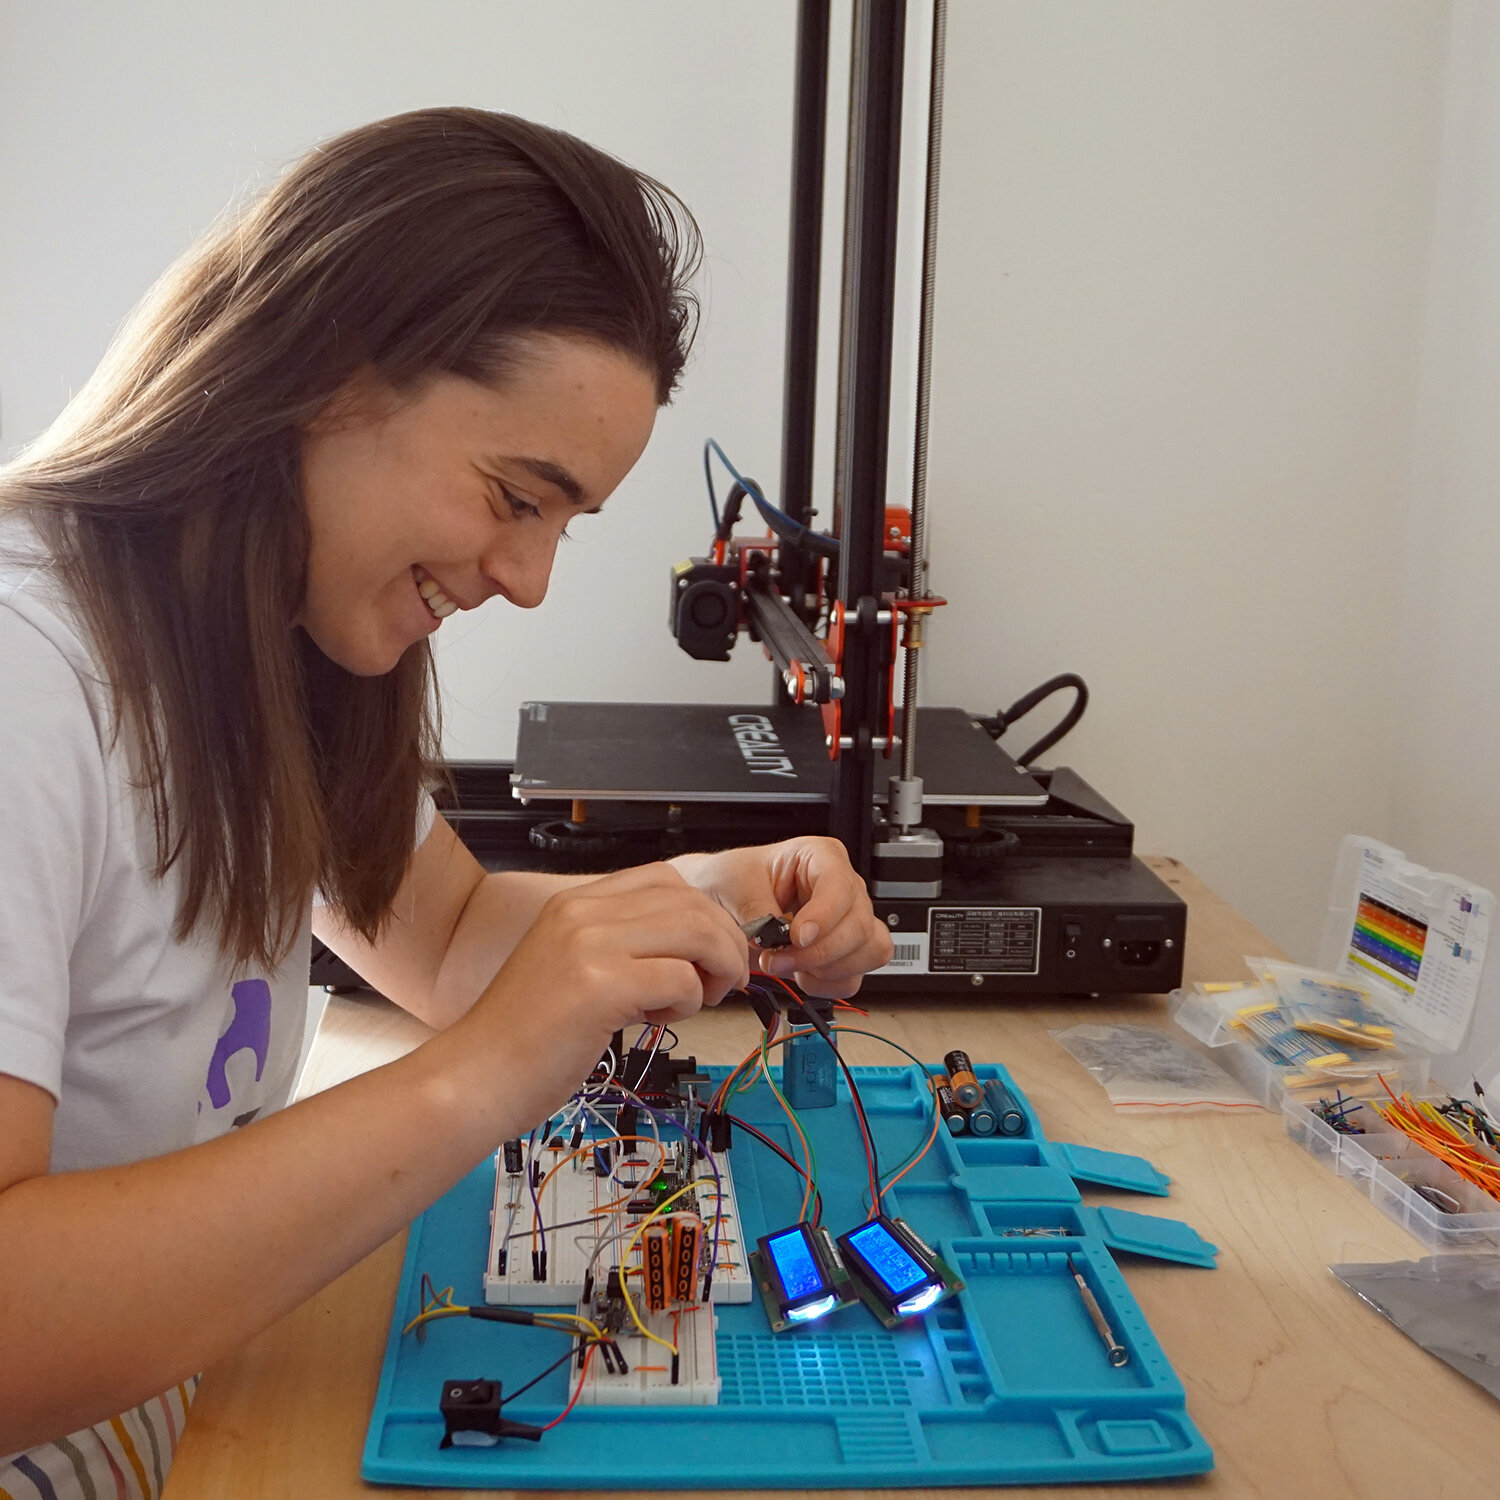 Amy Ruffley assembling a circuit board